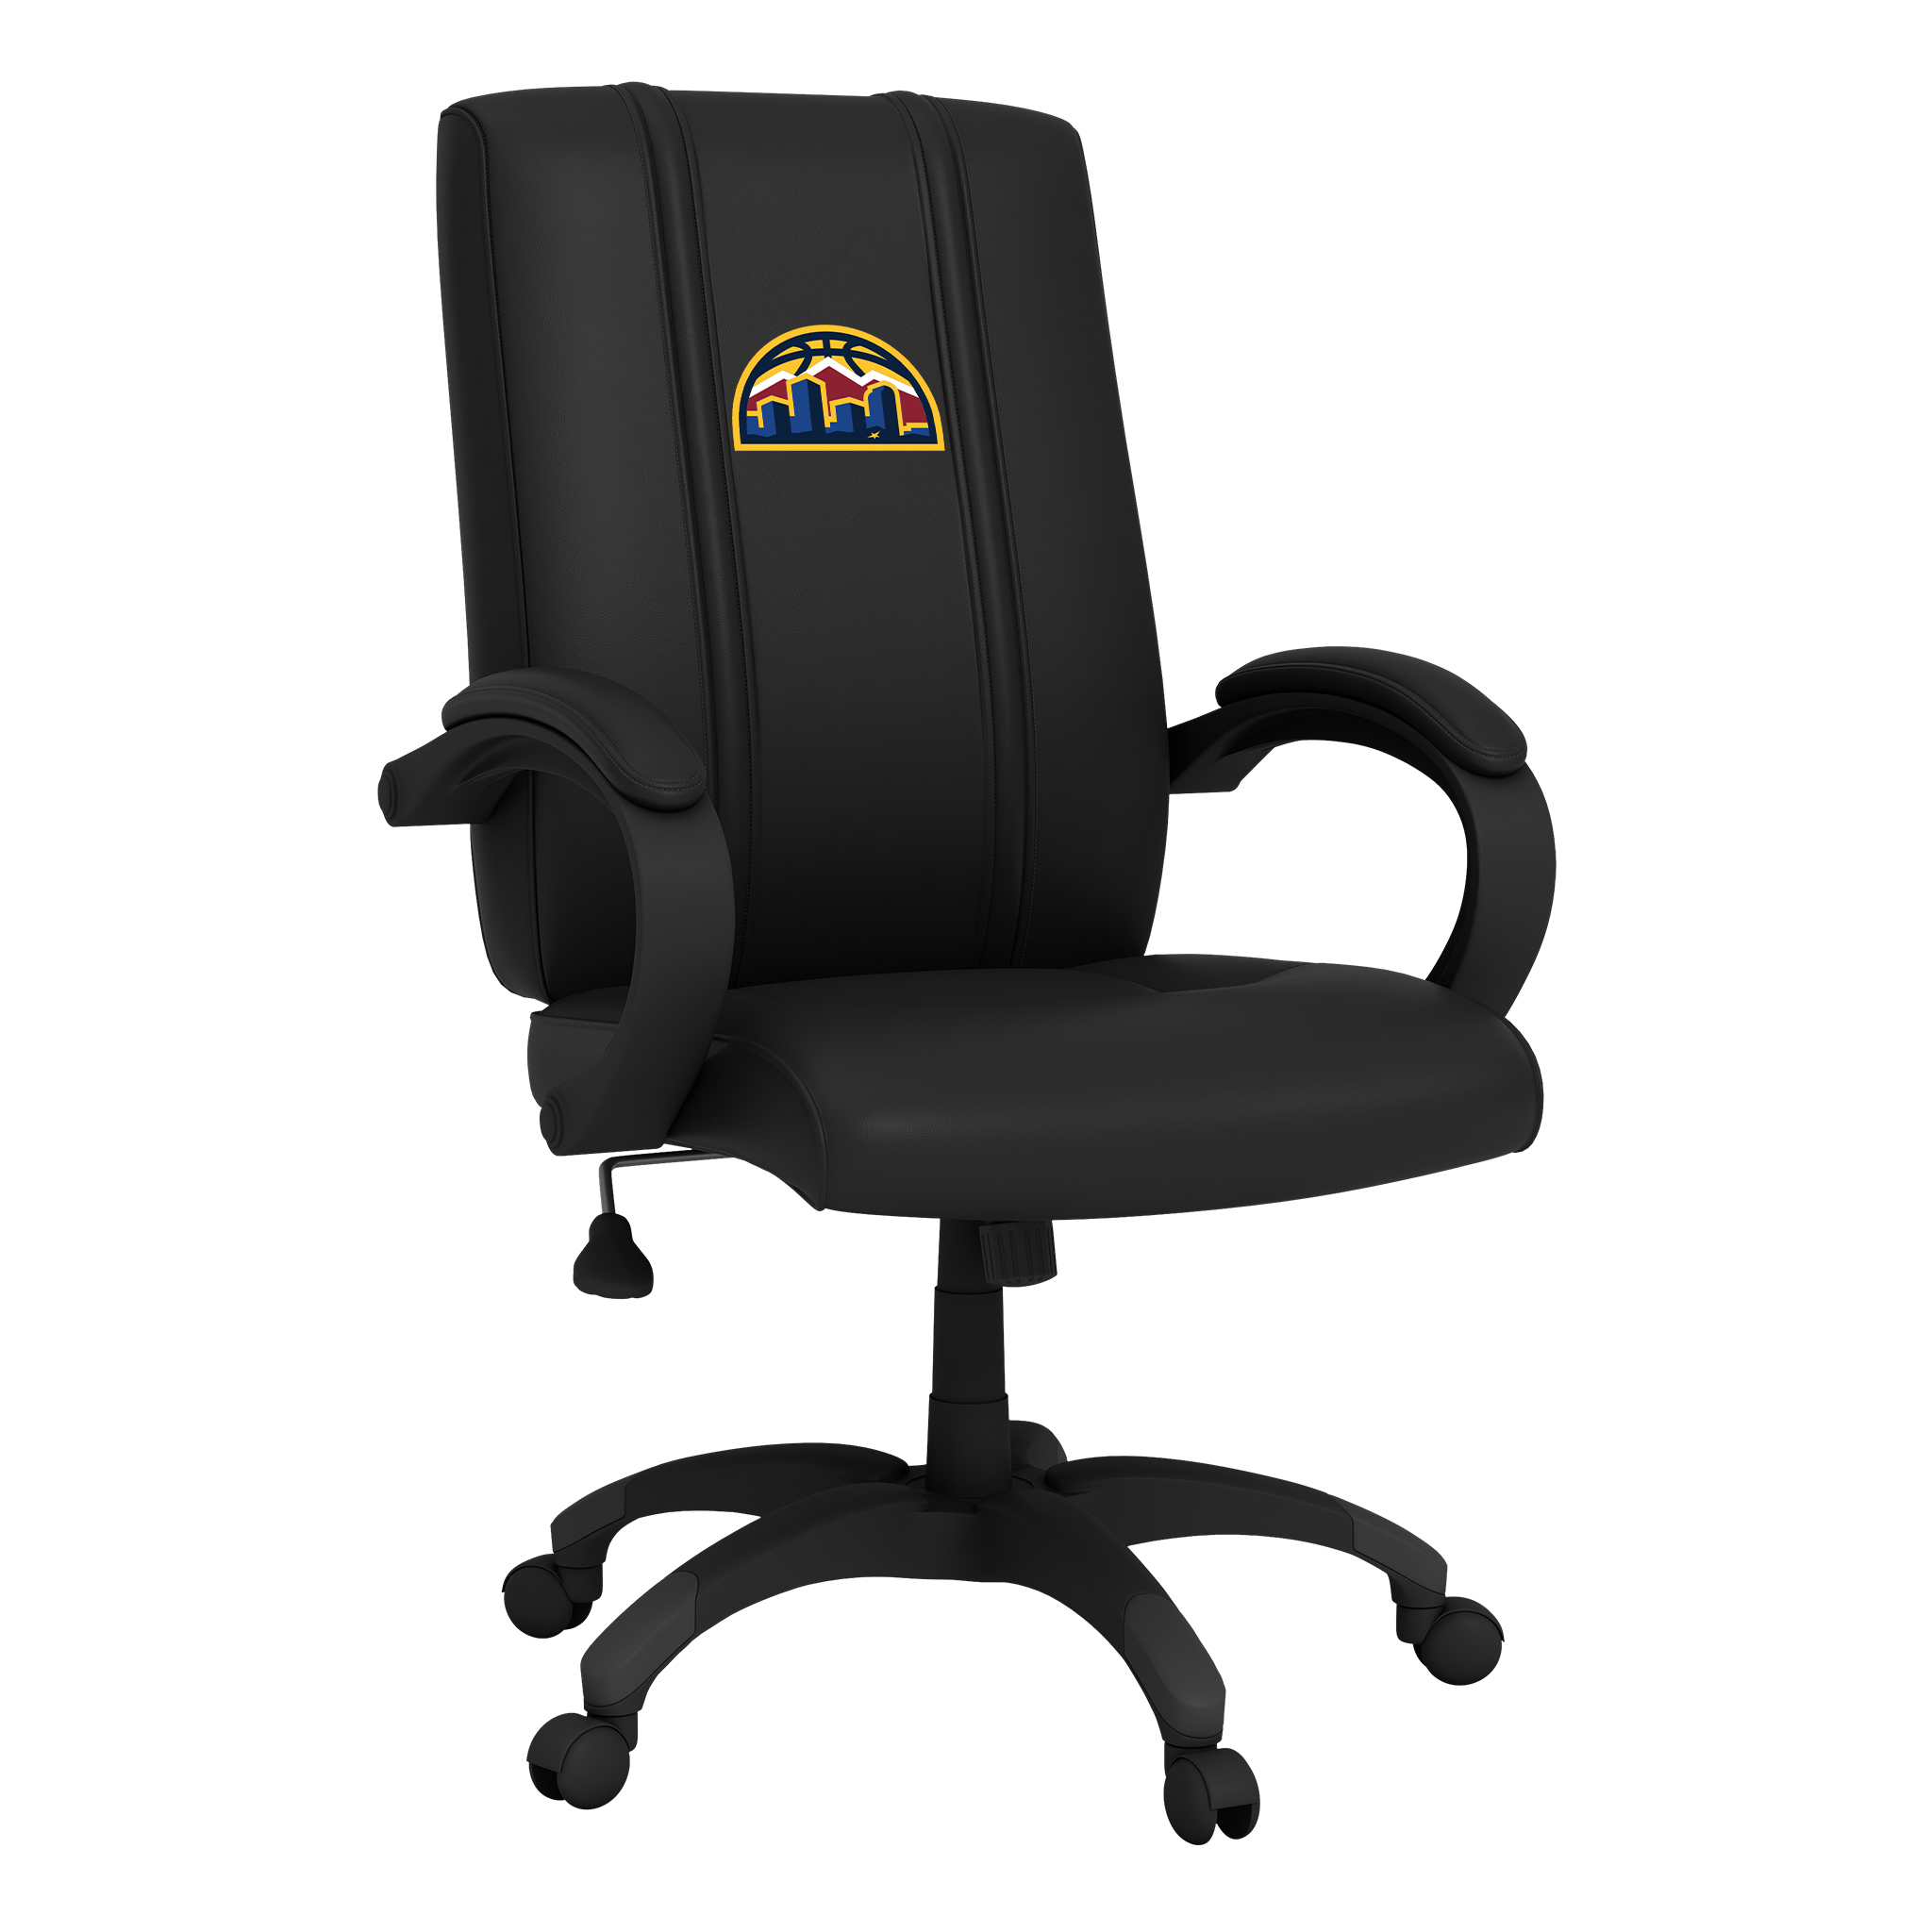 Denver Nuggets Office Chair 1000 with Denver Nuggets Alternate Logo